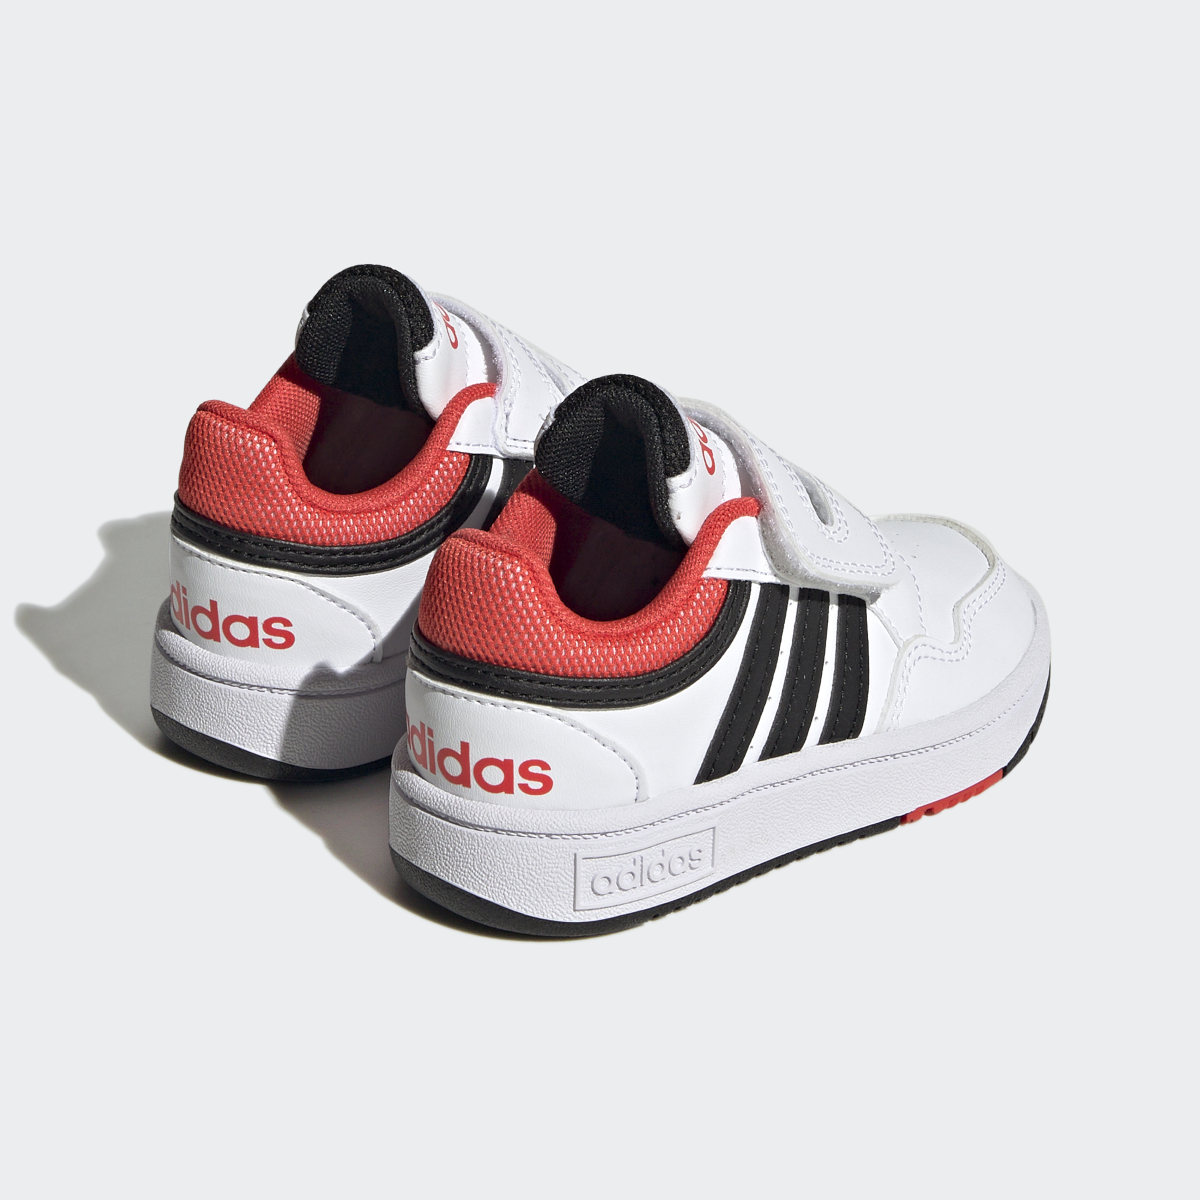 Adidas Scarpe Hoops. 6